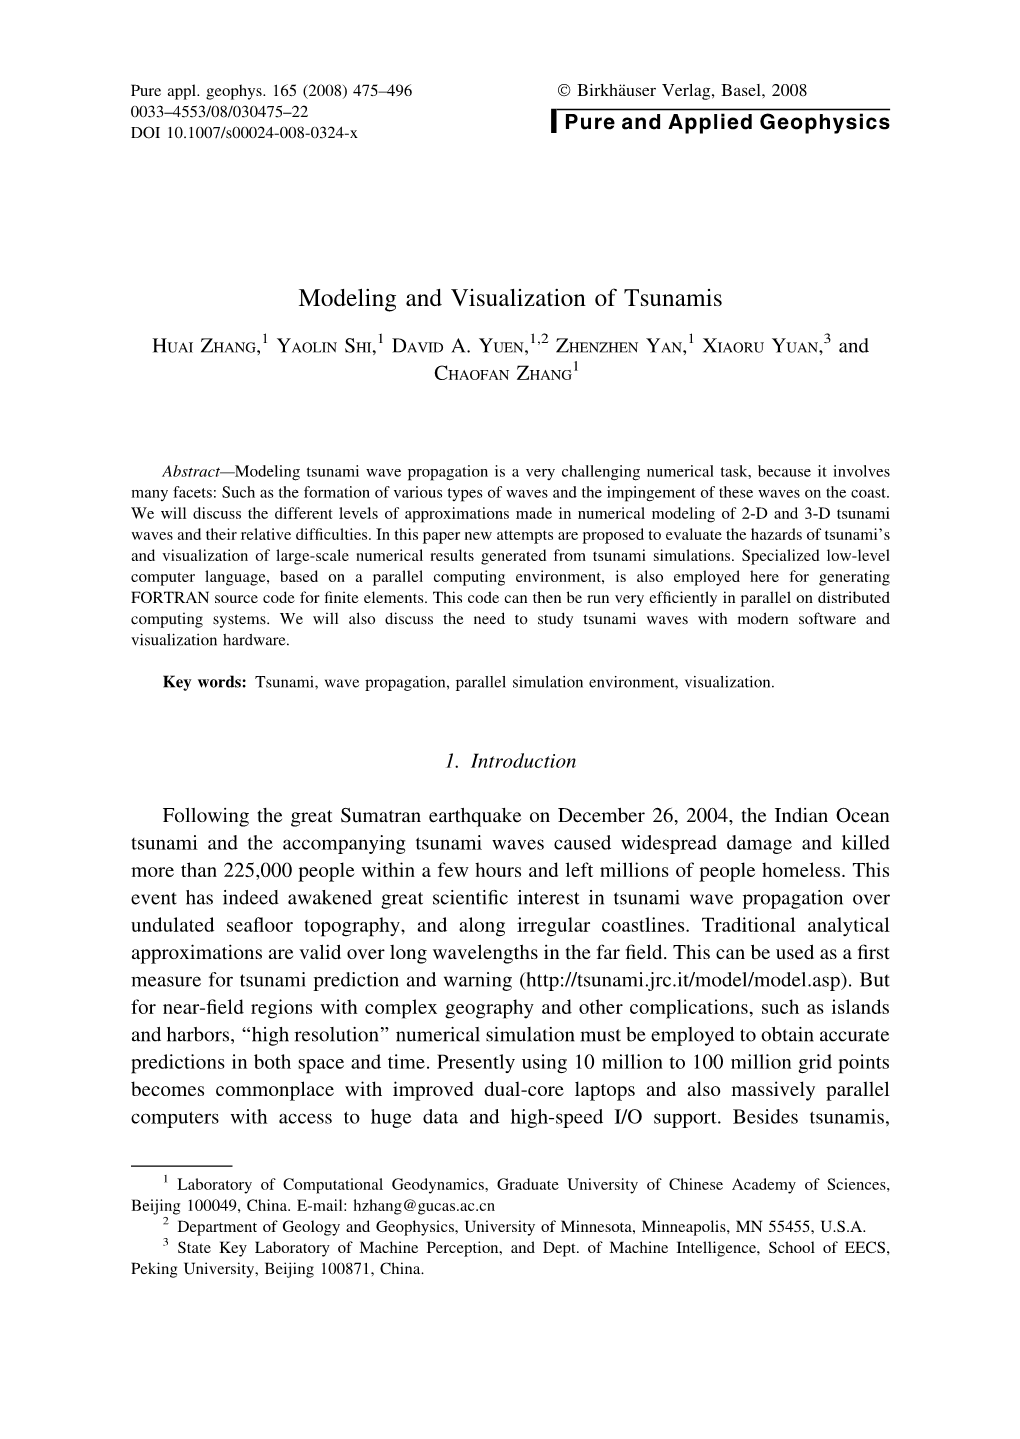 Modeling and Visualization of Tsunamis